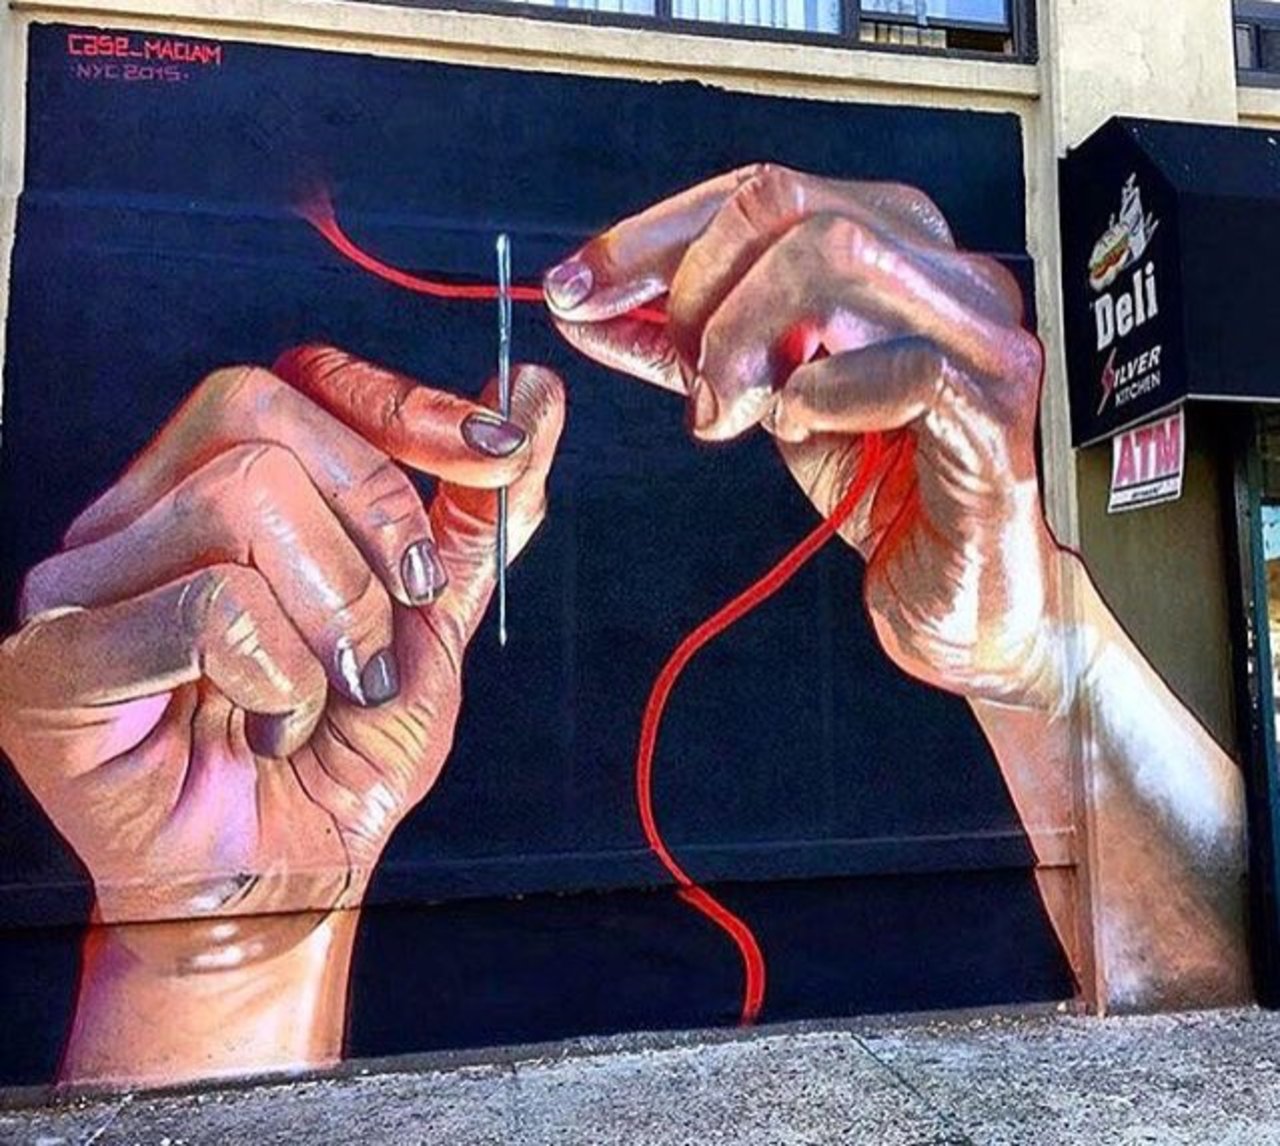 New Street Art by Case Ma'Claim in NYC 

#art #graffiti #mural #streetart https://t.co/66lzAkislr